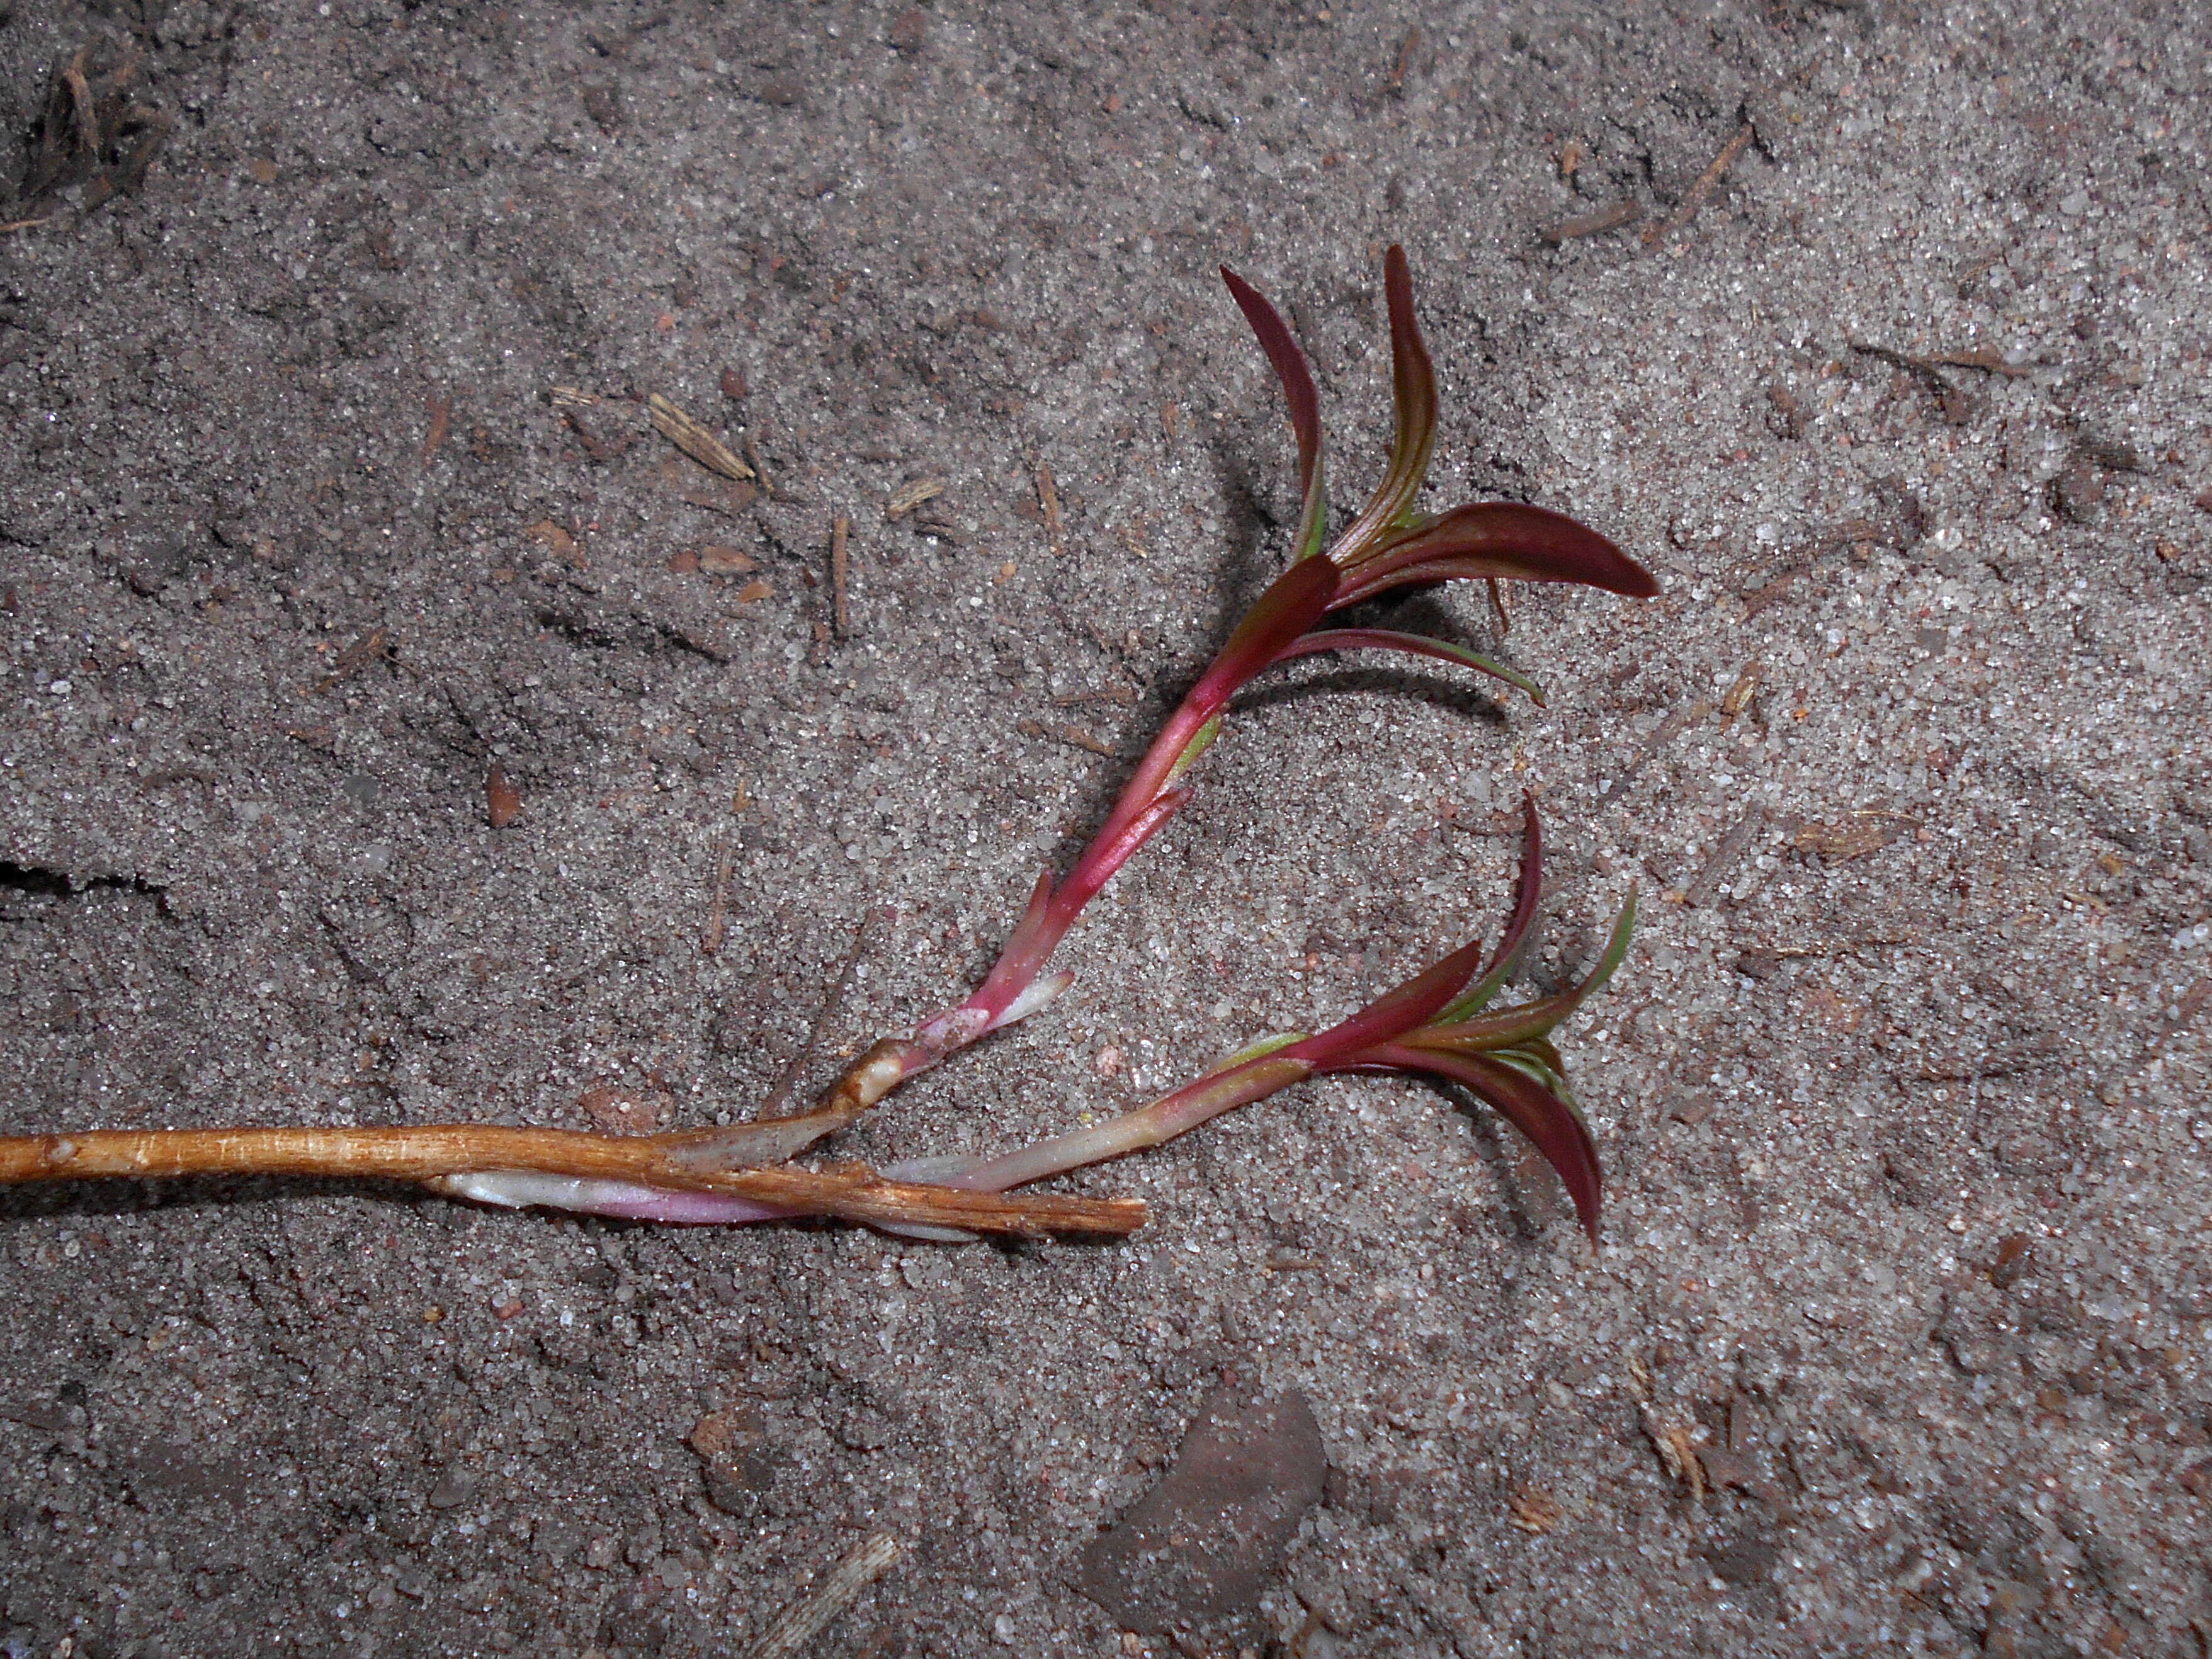 Image of Narrow-Leaf Fireweed